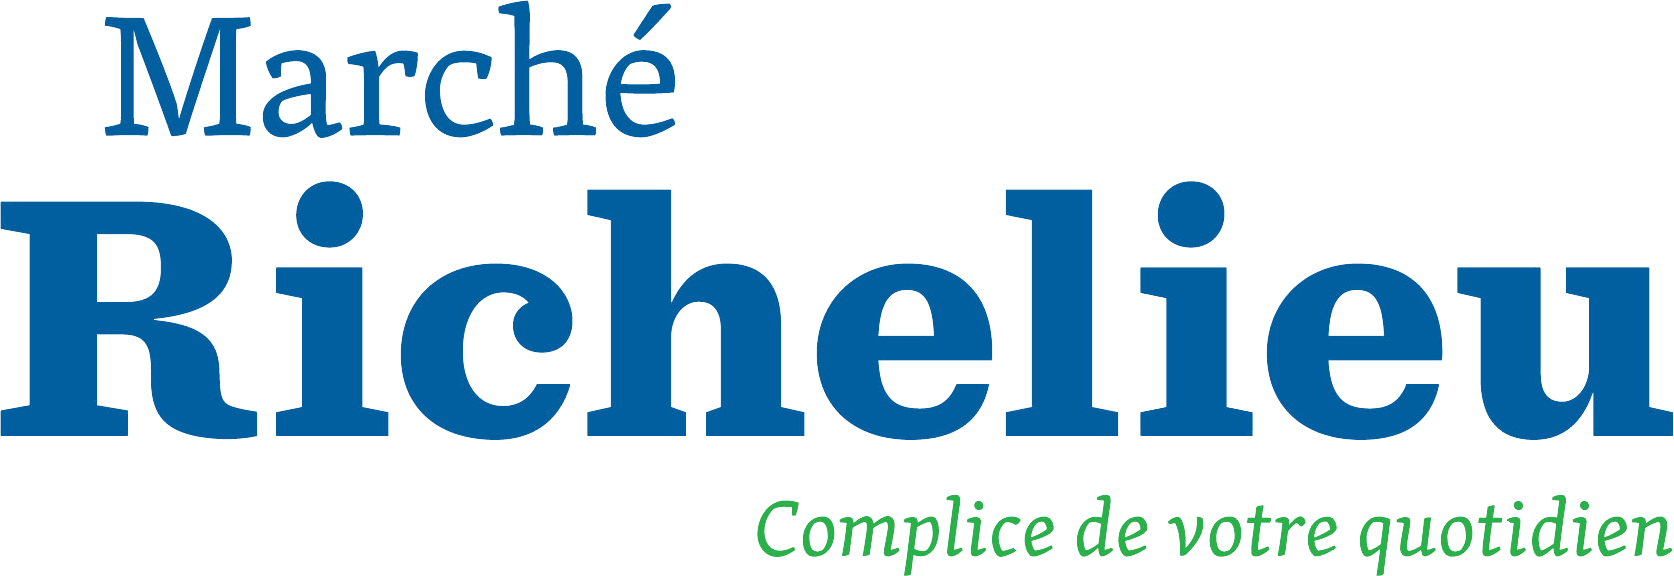 Marché Richelieu - Grocery Store